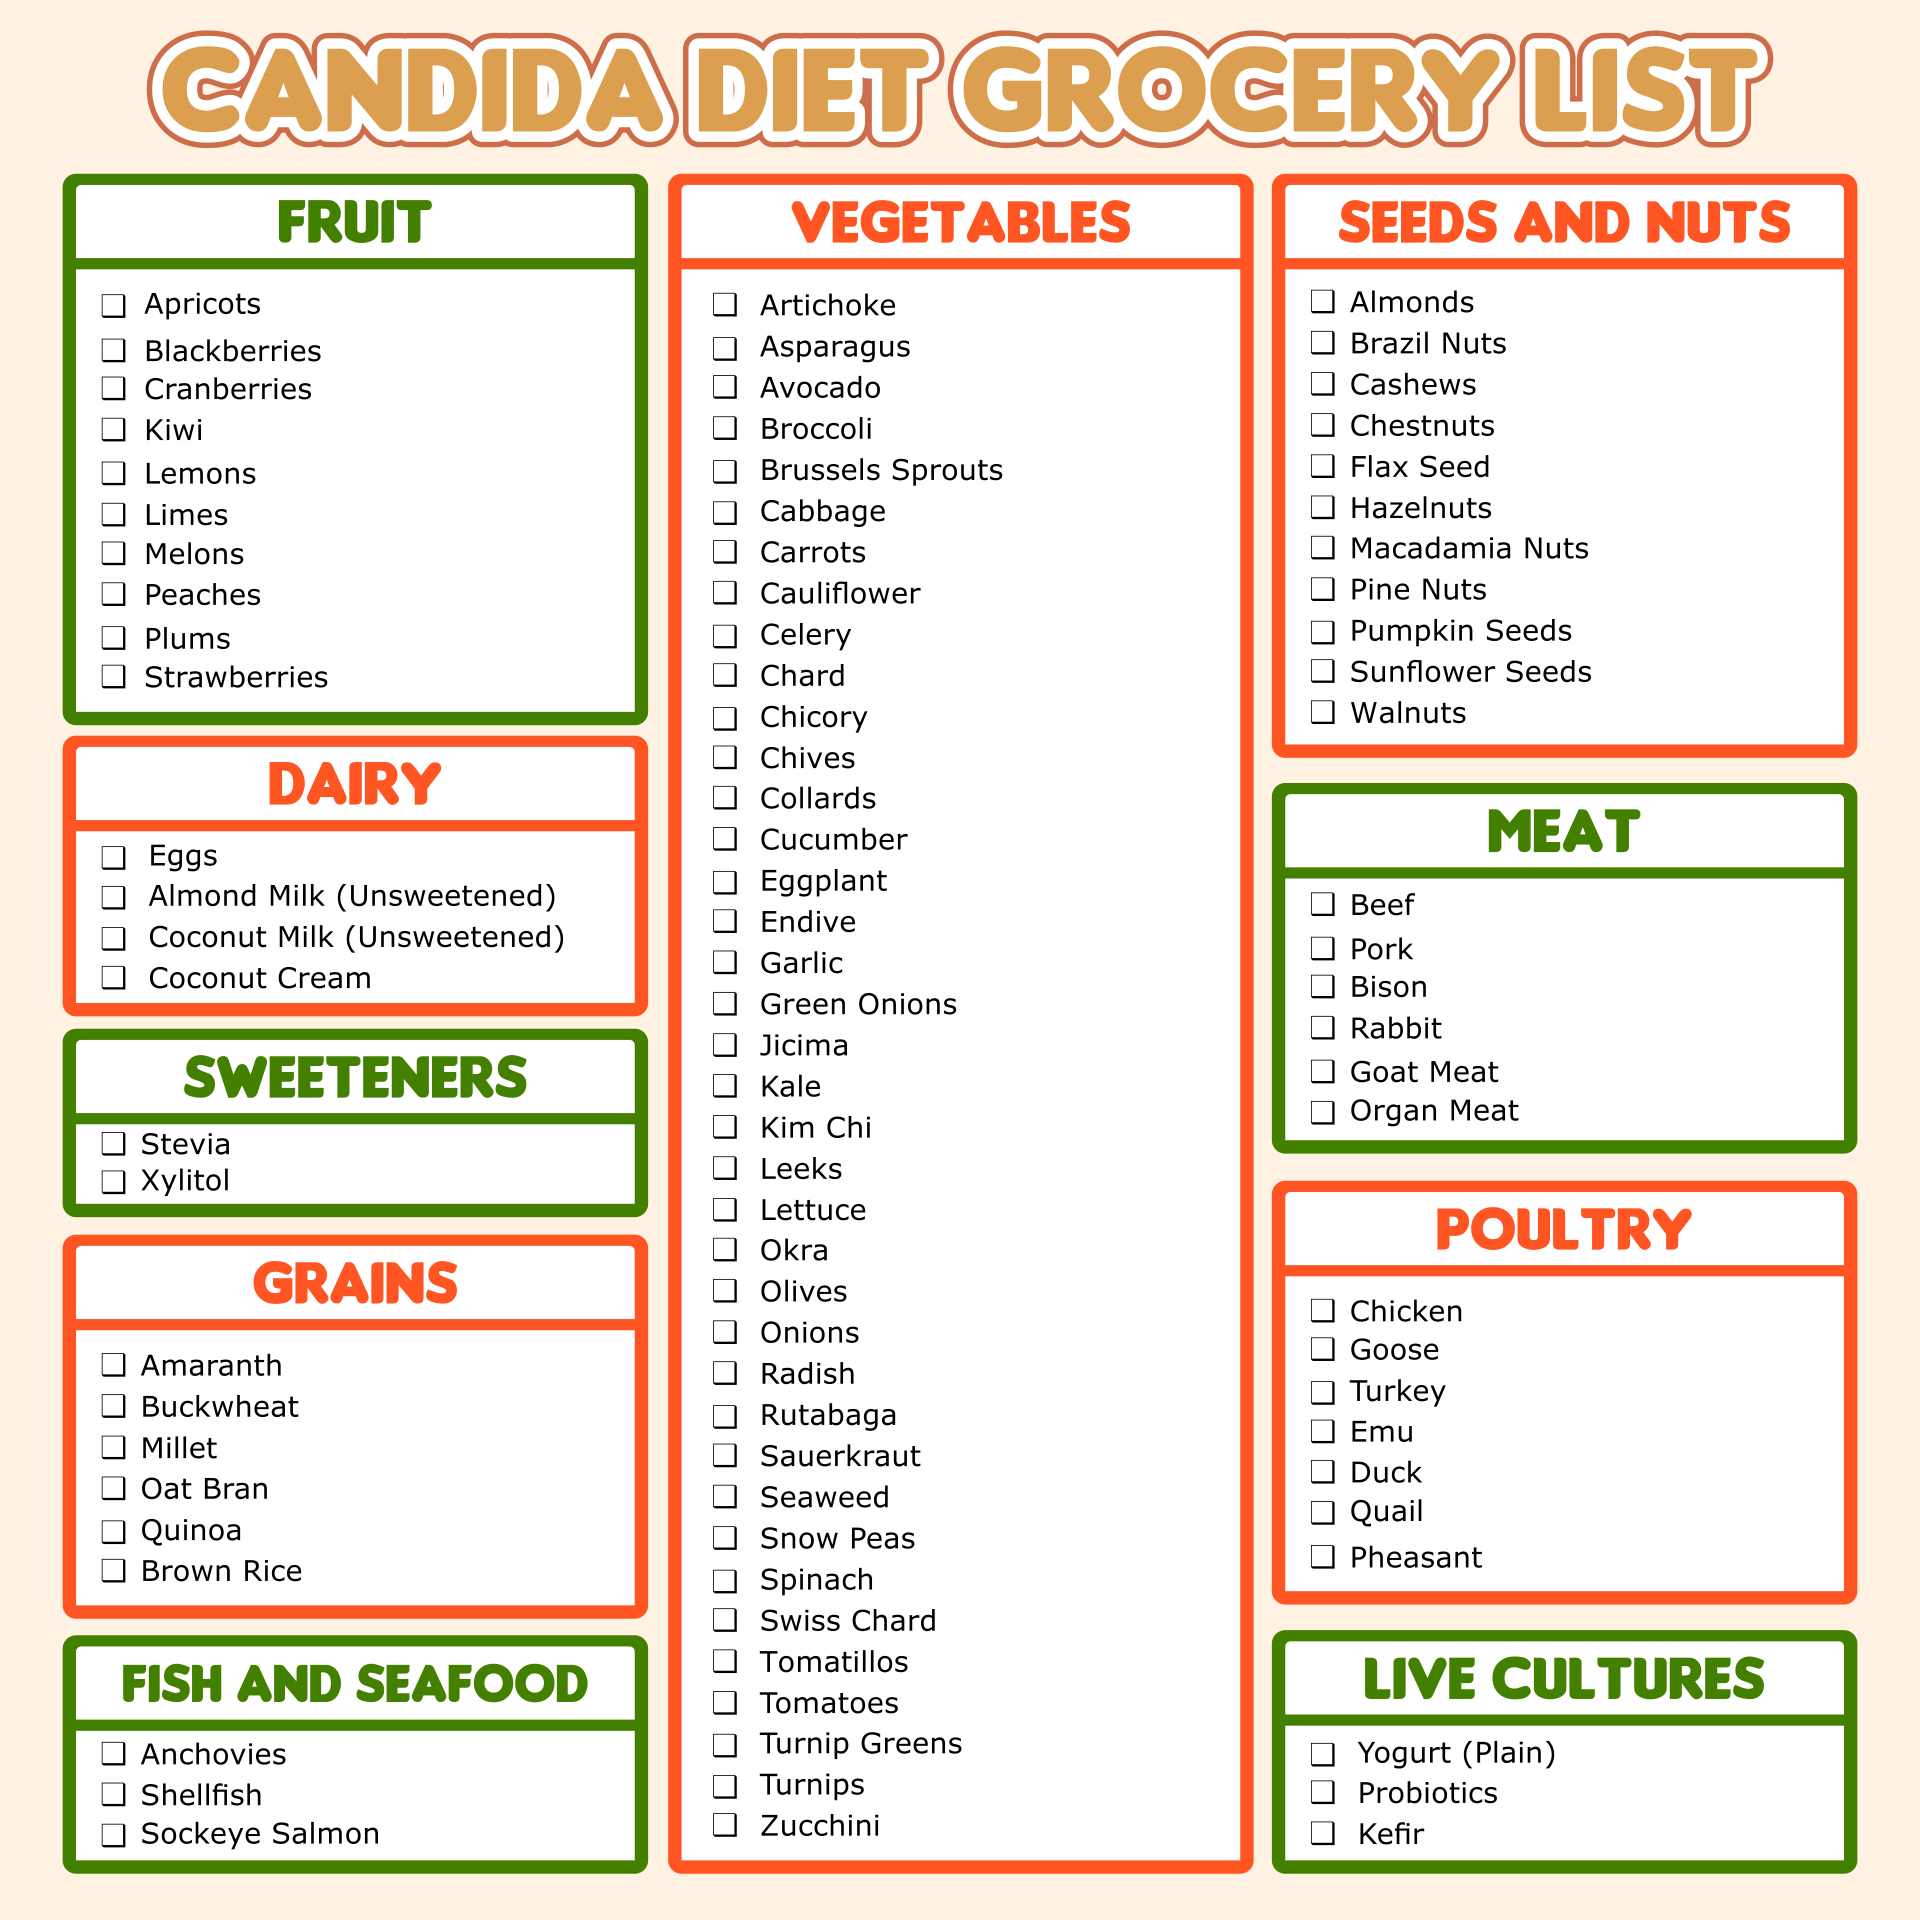 9 Best Images of Diet Grocery List Printable - Paleo Diet ...